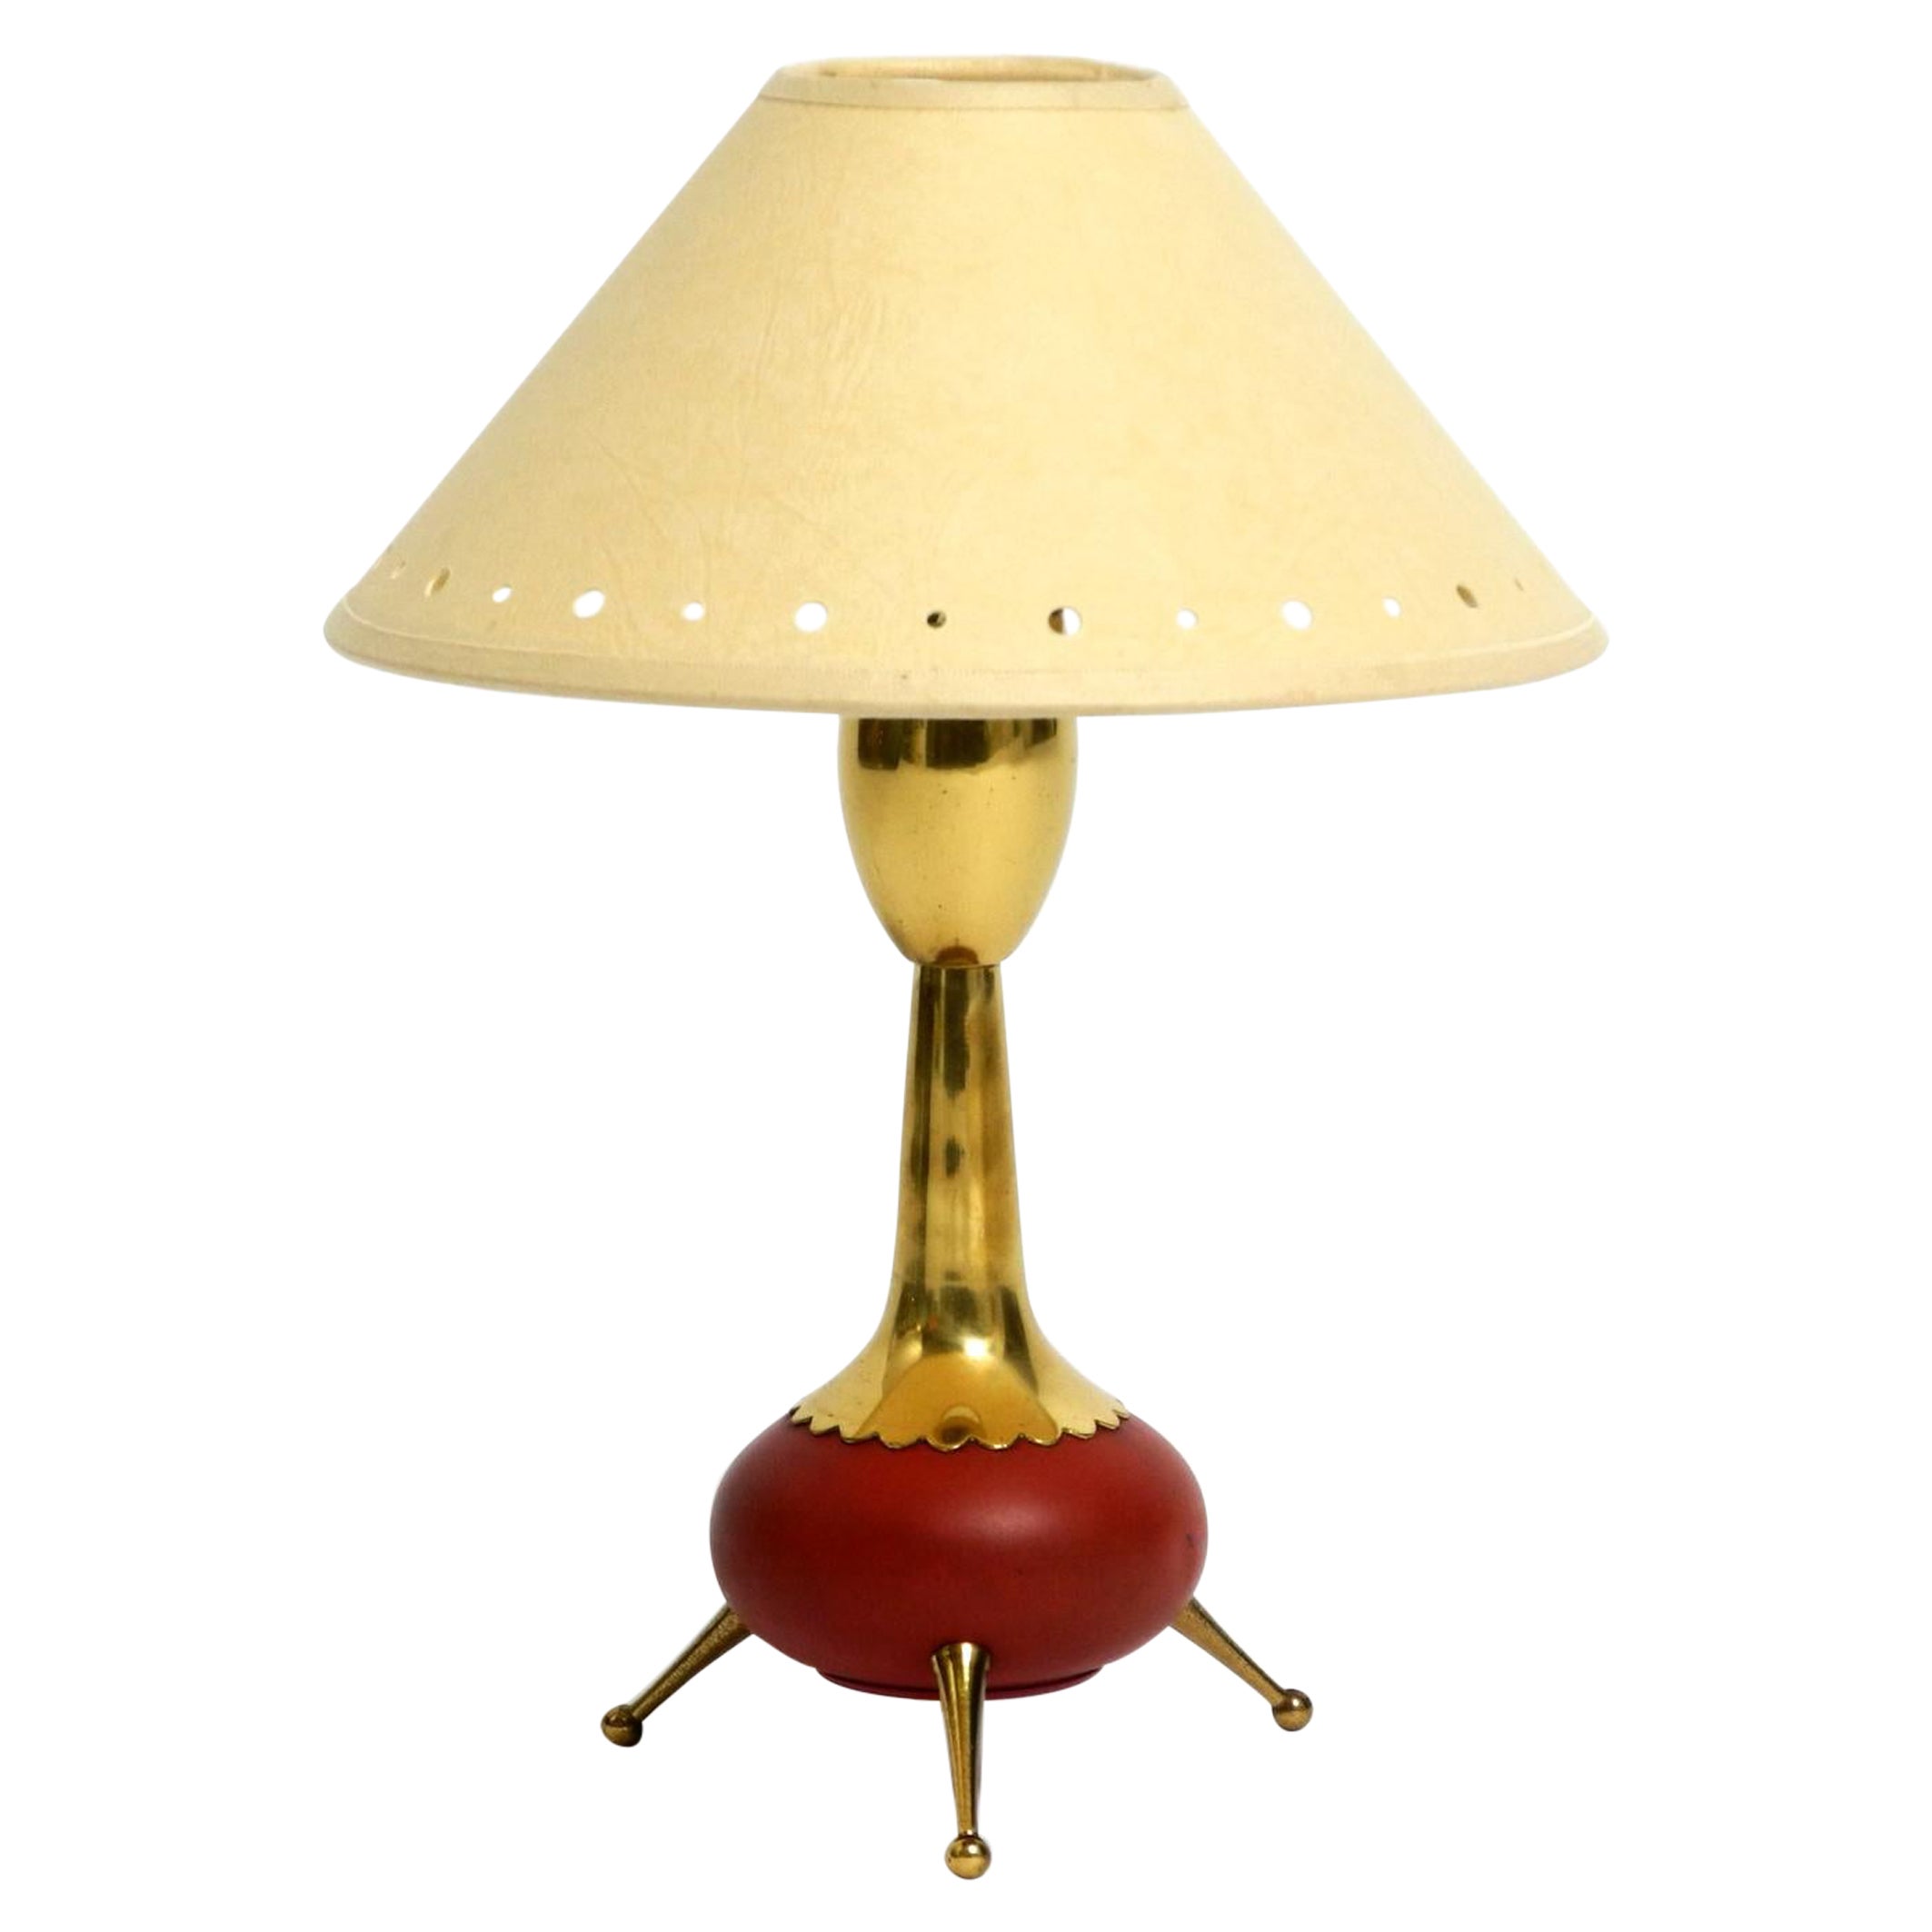 Beautiful very rare original Mid Century Modern brass tripod table lamp